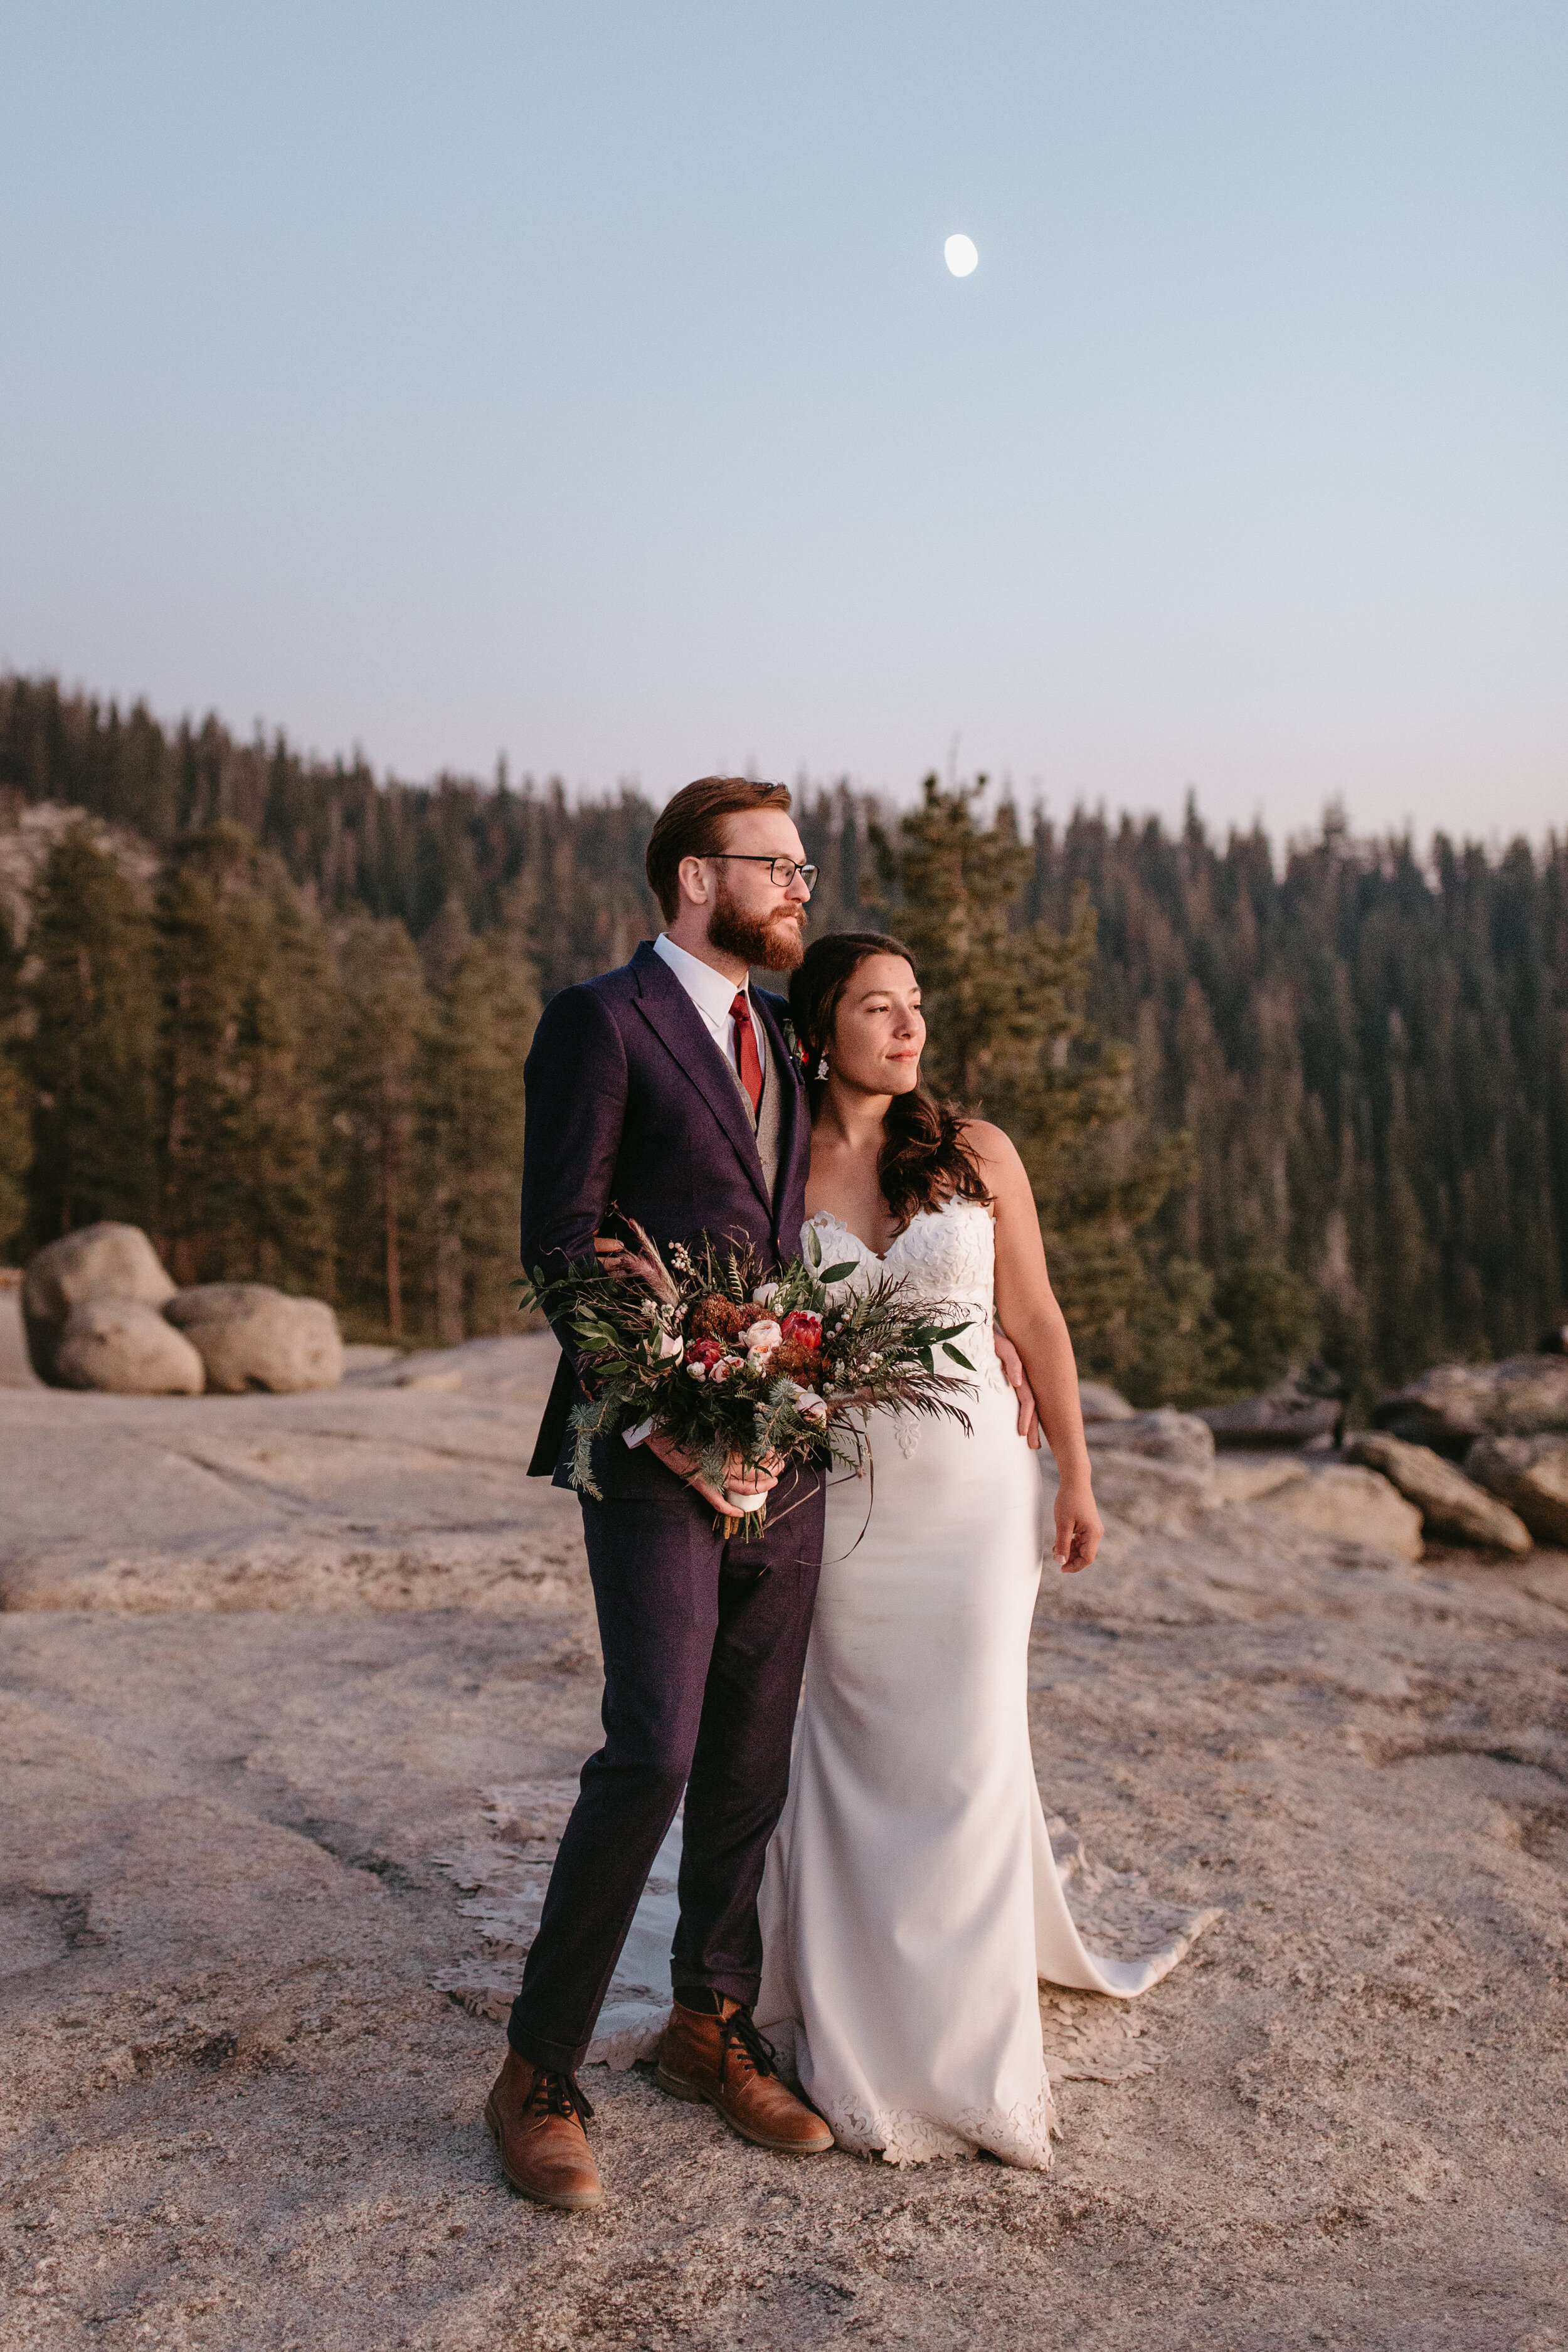 Nicole-Daacke-Photography-yosemite-national-park-elopement-photography-adventure-elopement-in-yosemite-taft-point-sunset-elopement-photographs-california-intimate-destination-wedding-in-yosemite-national-park-9547.jpg